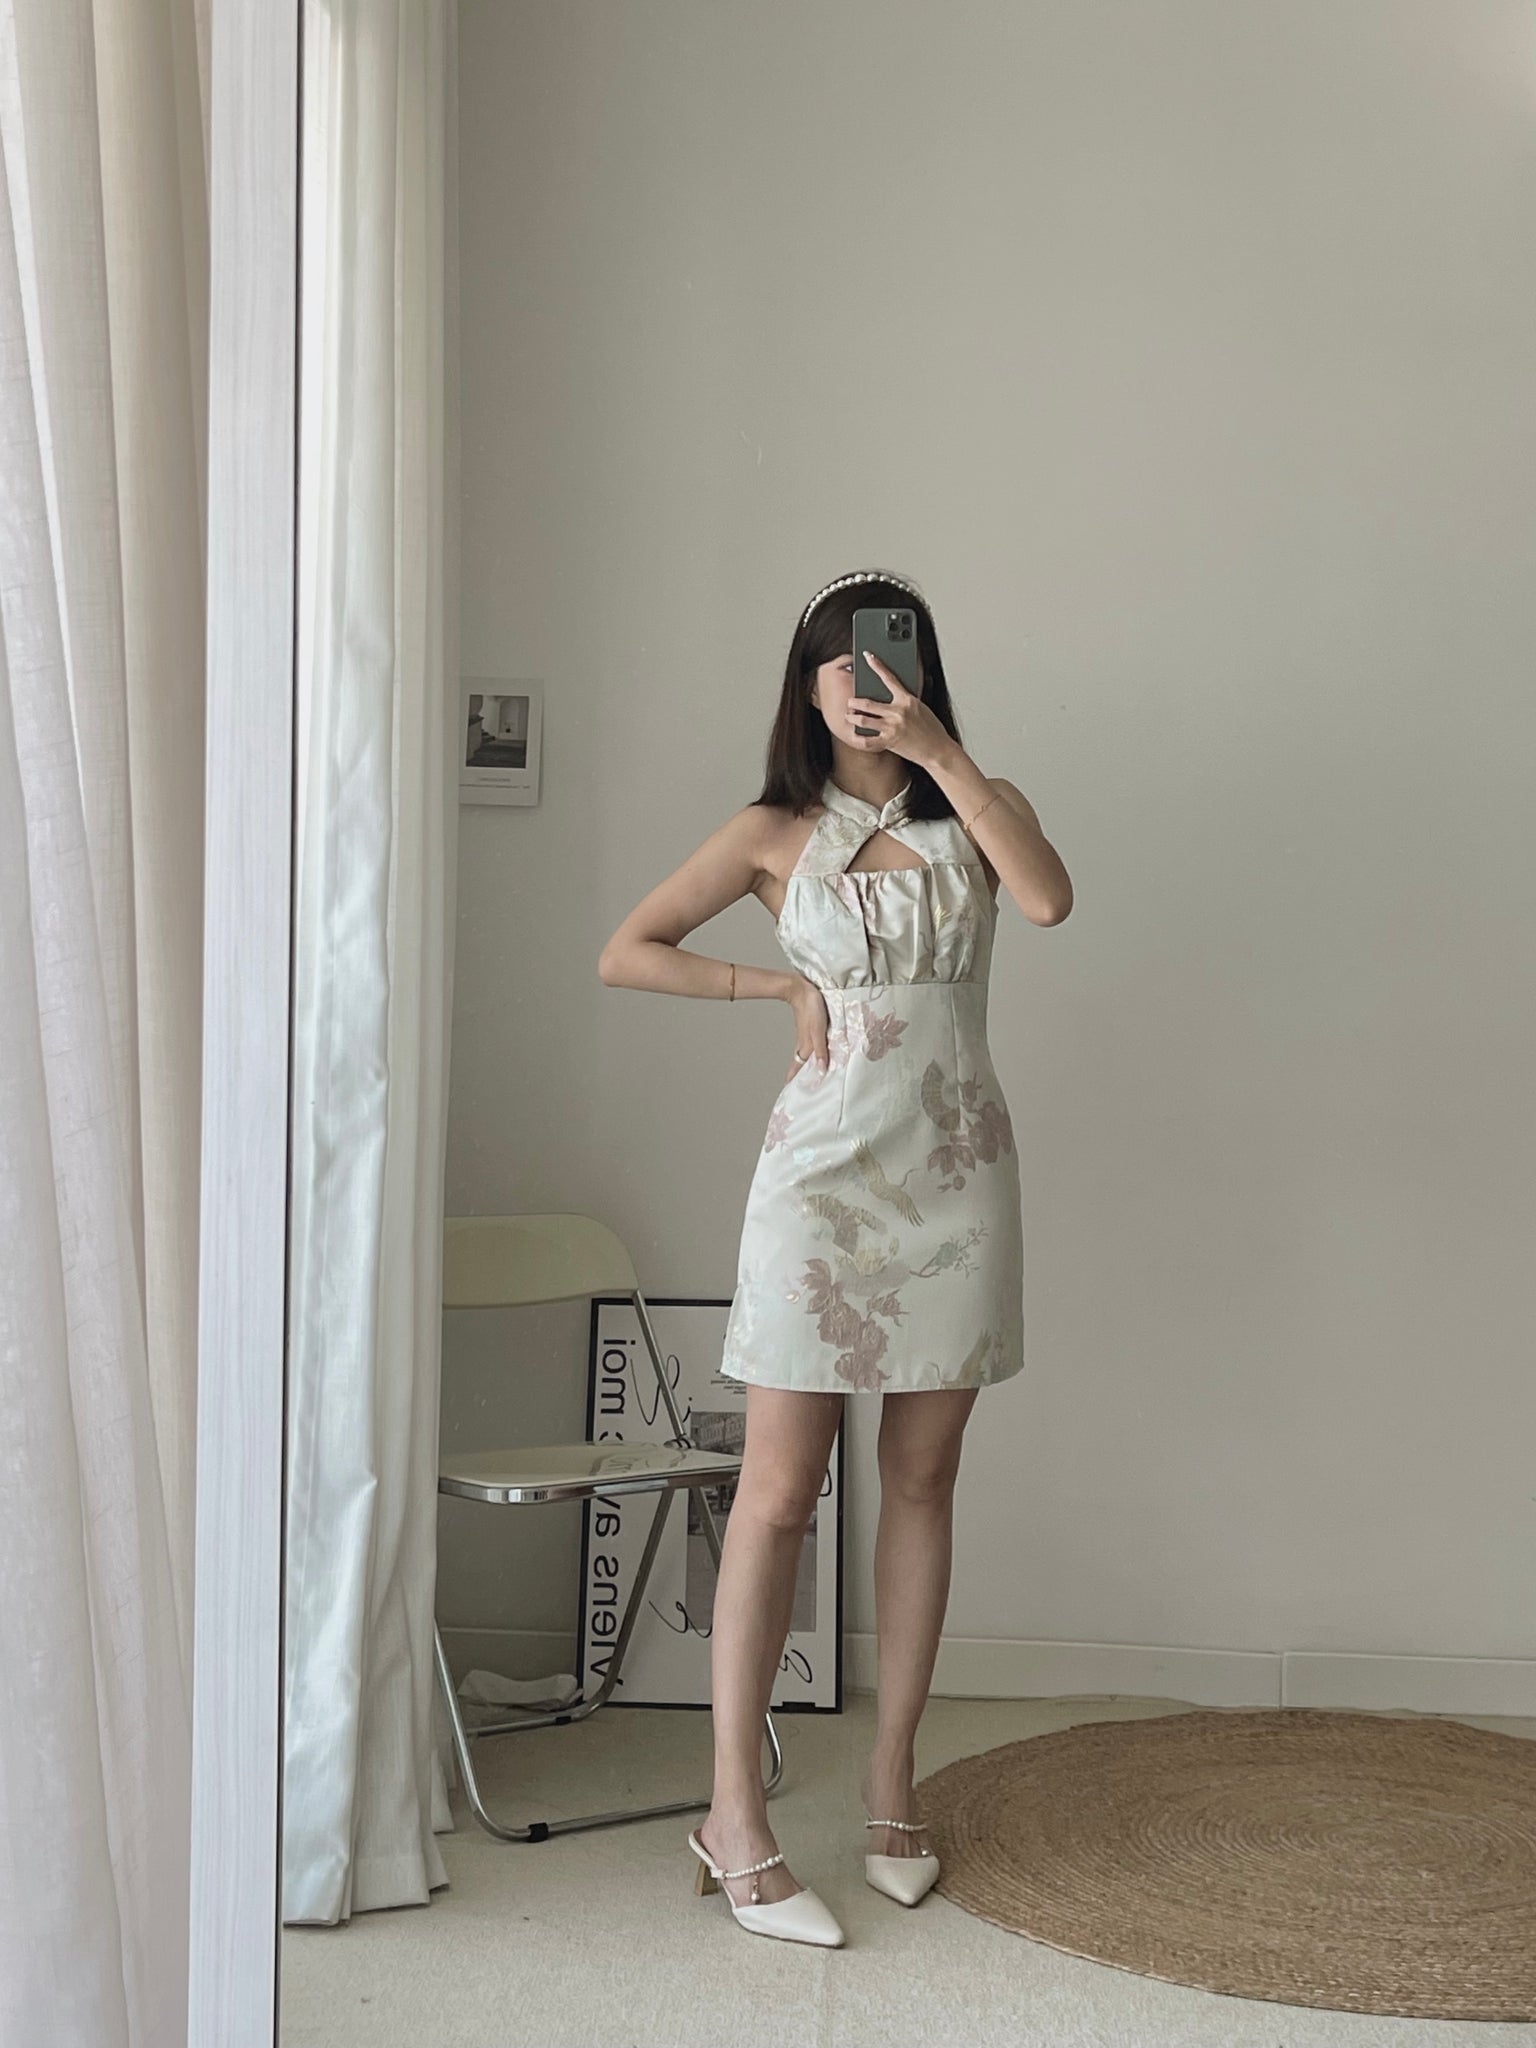 Xianhe Brocade Dress / 仙鹤提花挂脖旗袍